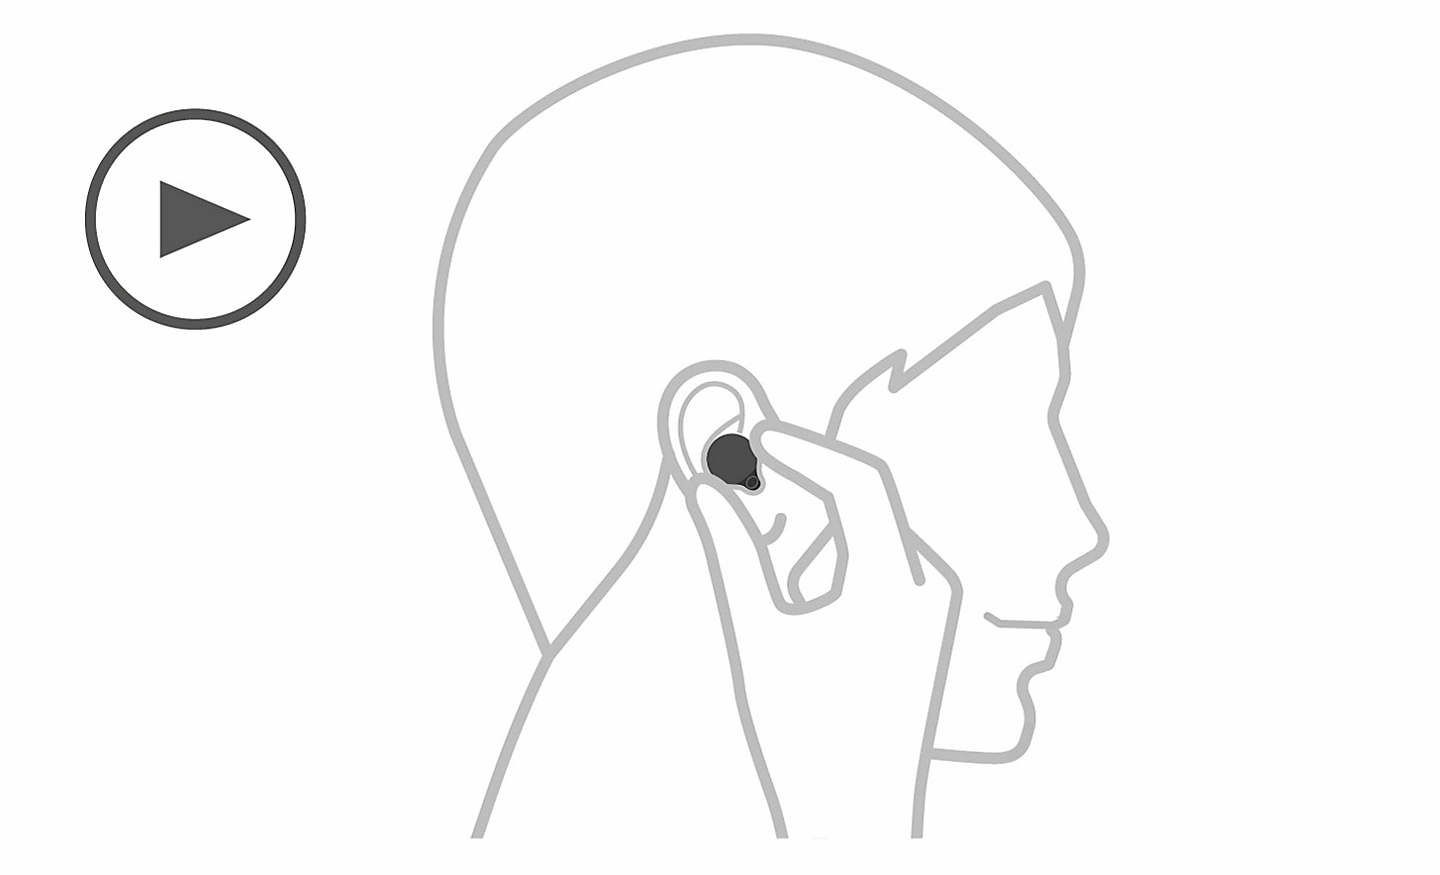 Slika glave, na levi strani je ikona za predvajanje, roka pa daje slušalko v uho